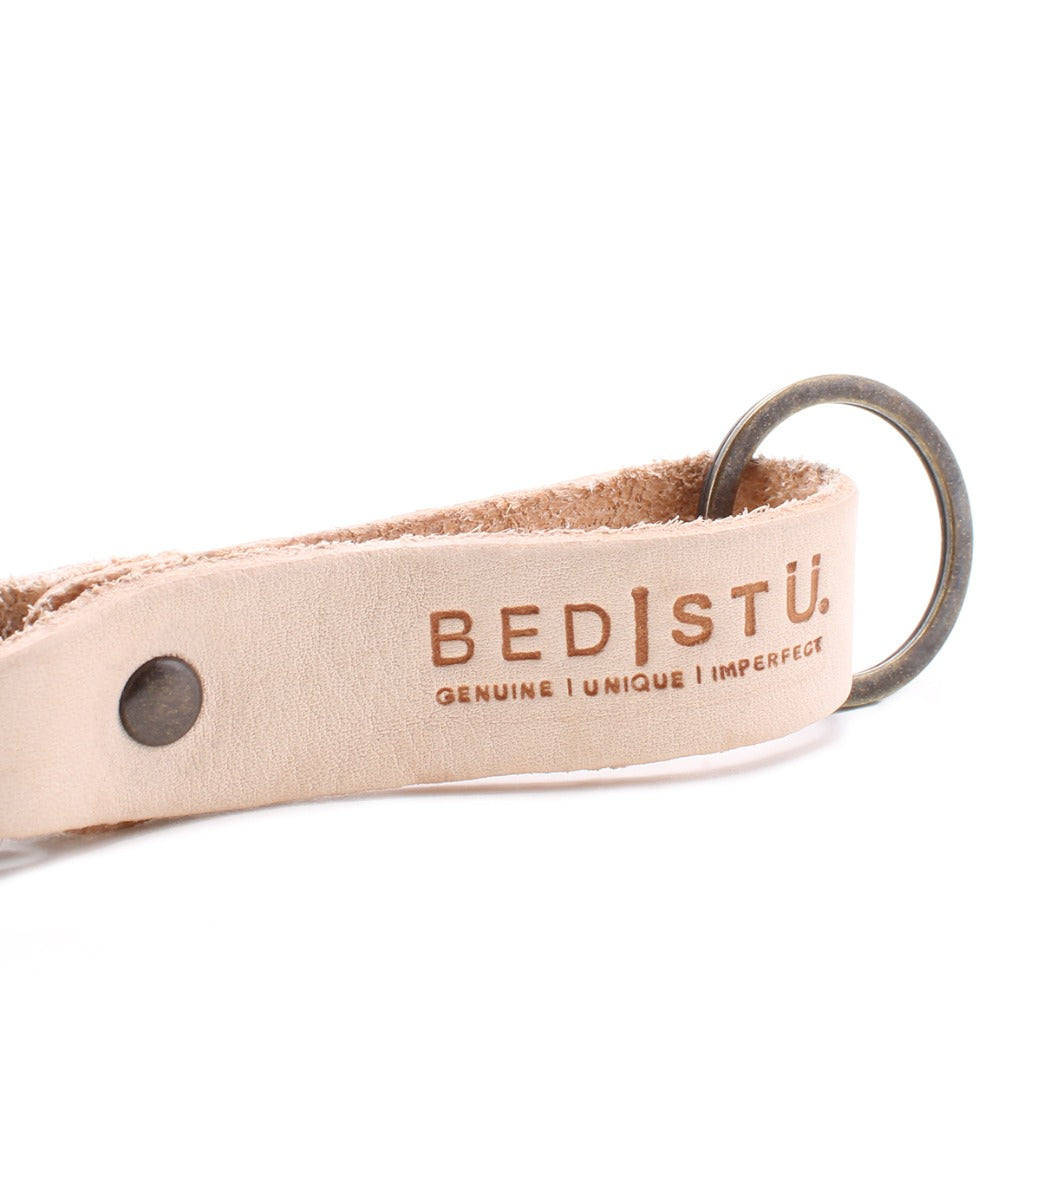 A Keygrab key ring with the word utstu on it. (Product Name: Keygrab, Brand Name: Bed Stu)